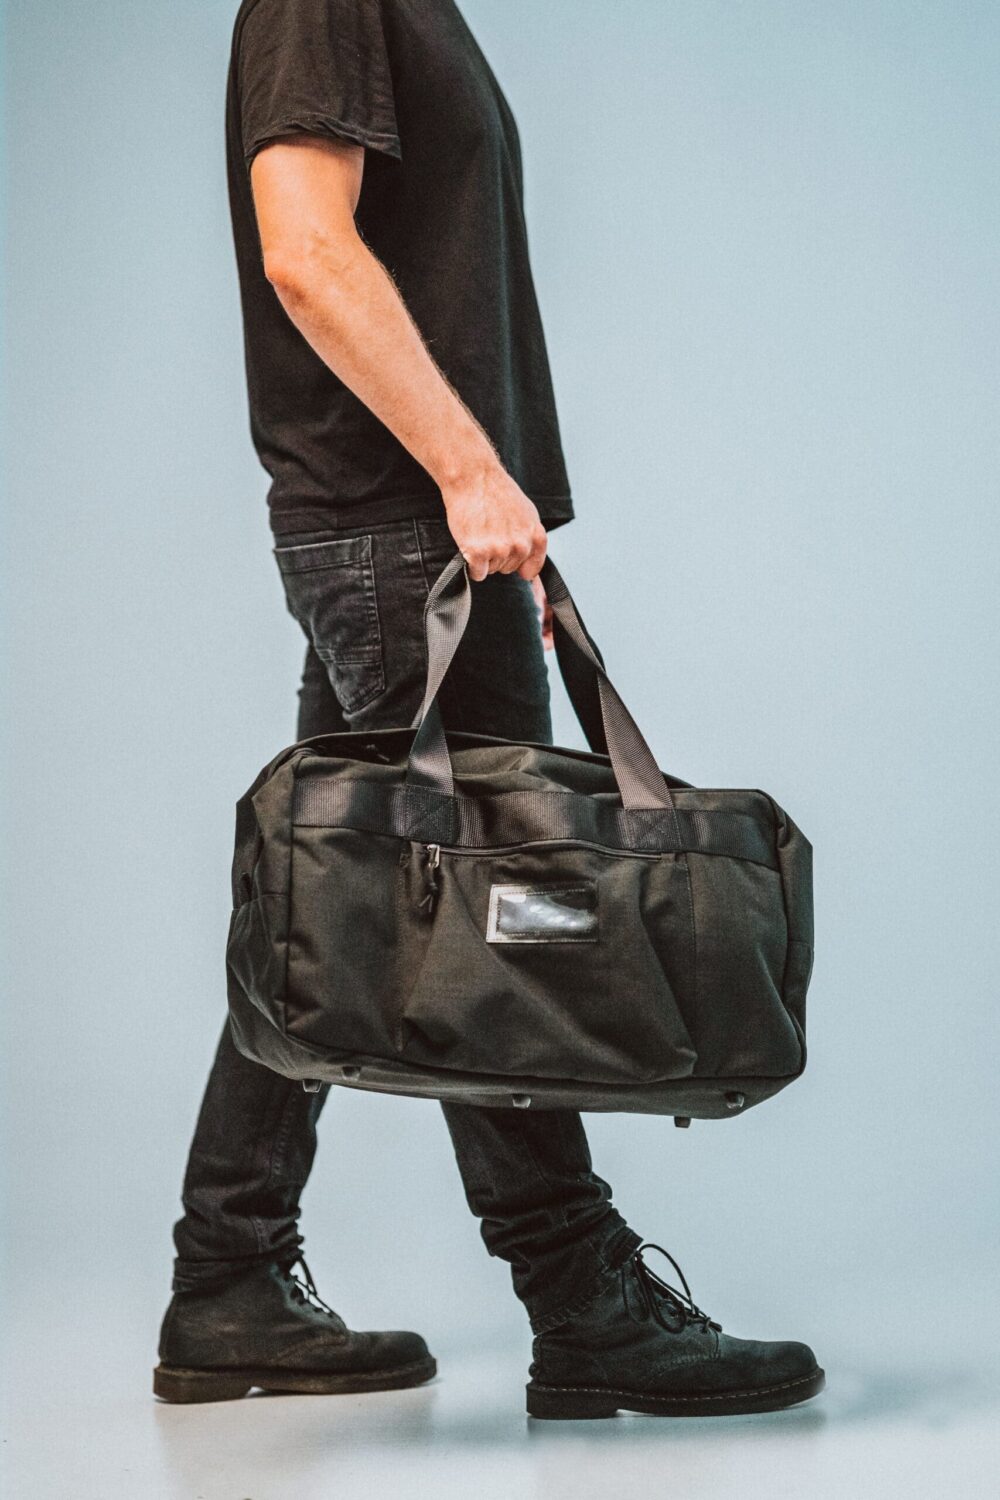 a man carrying a black duffel bag.